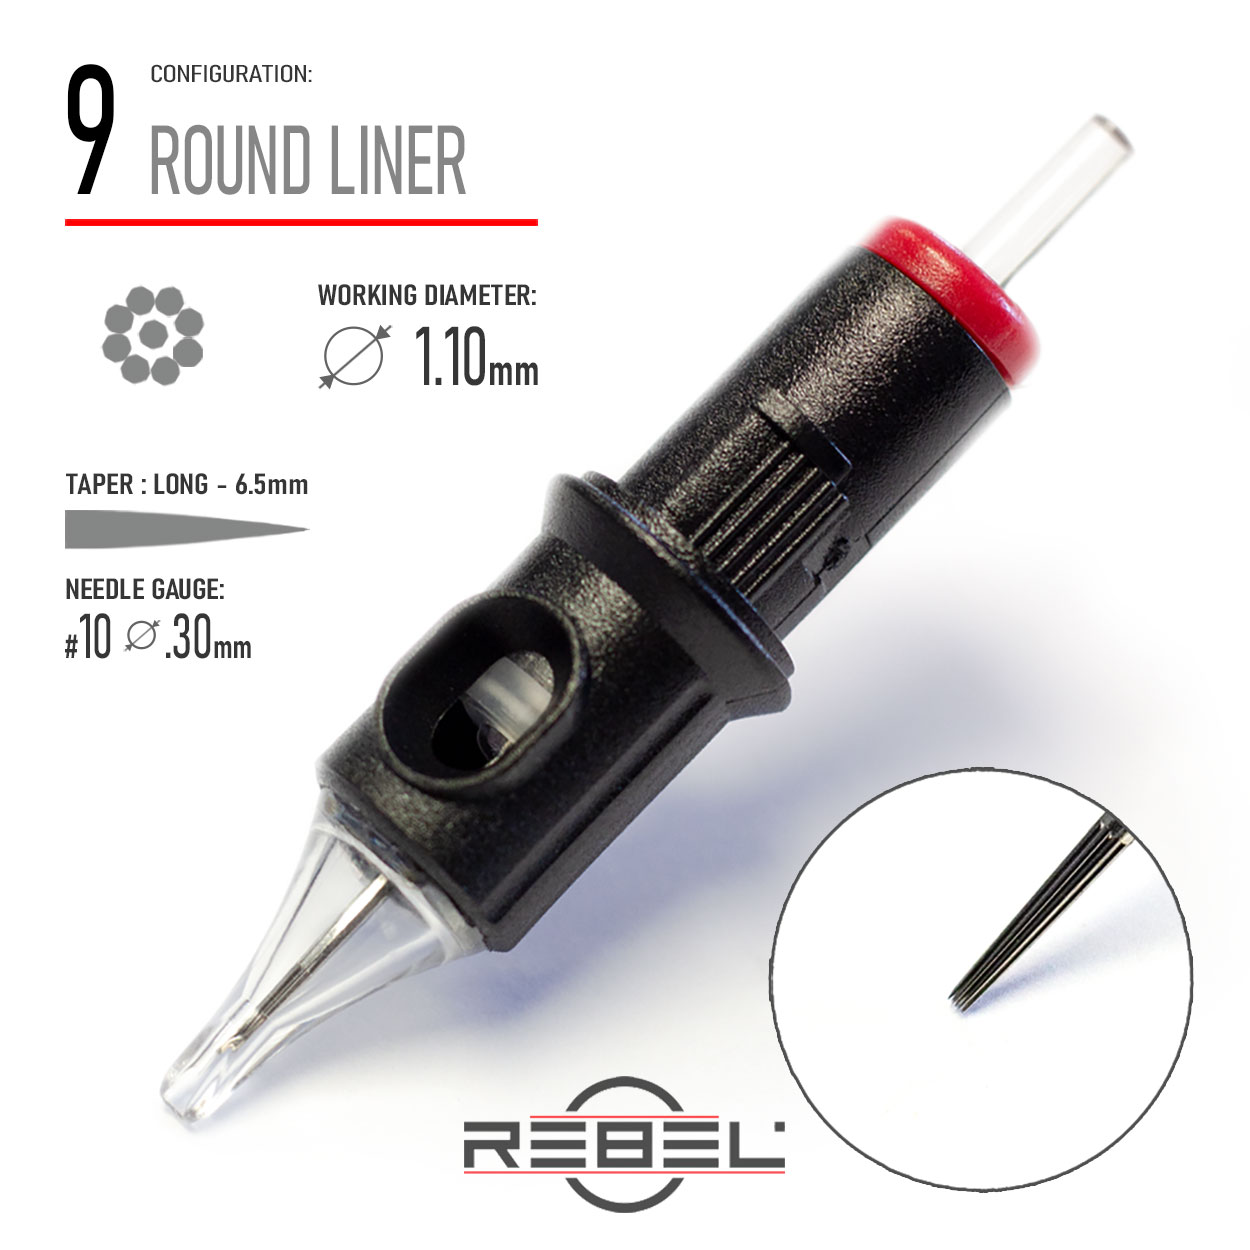 9 Round Liner Precision Tattoo Cartridge Needle - REBEL